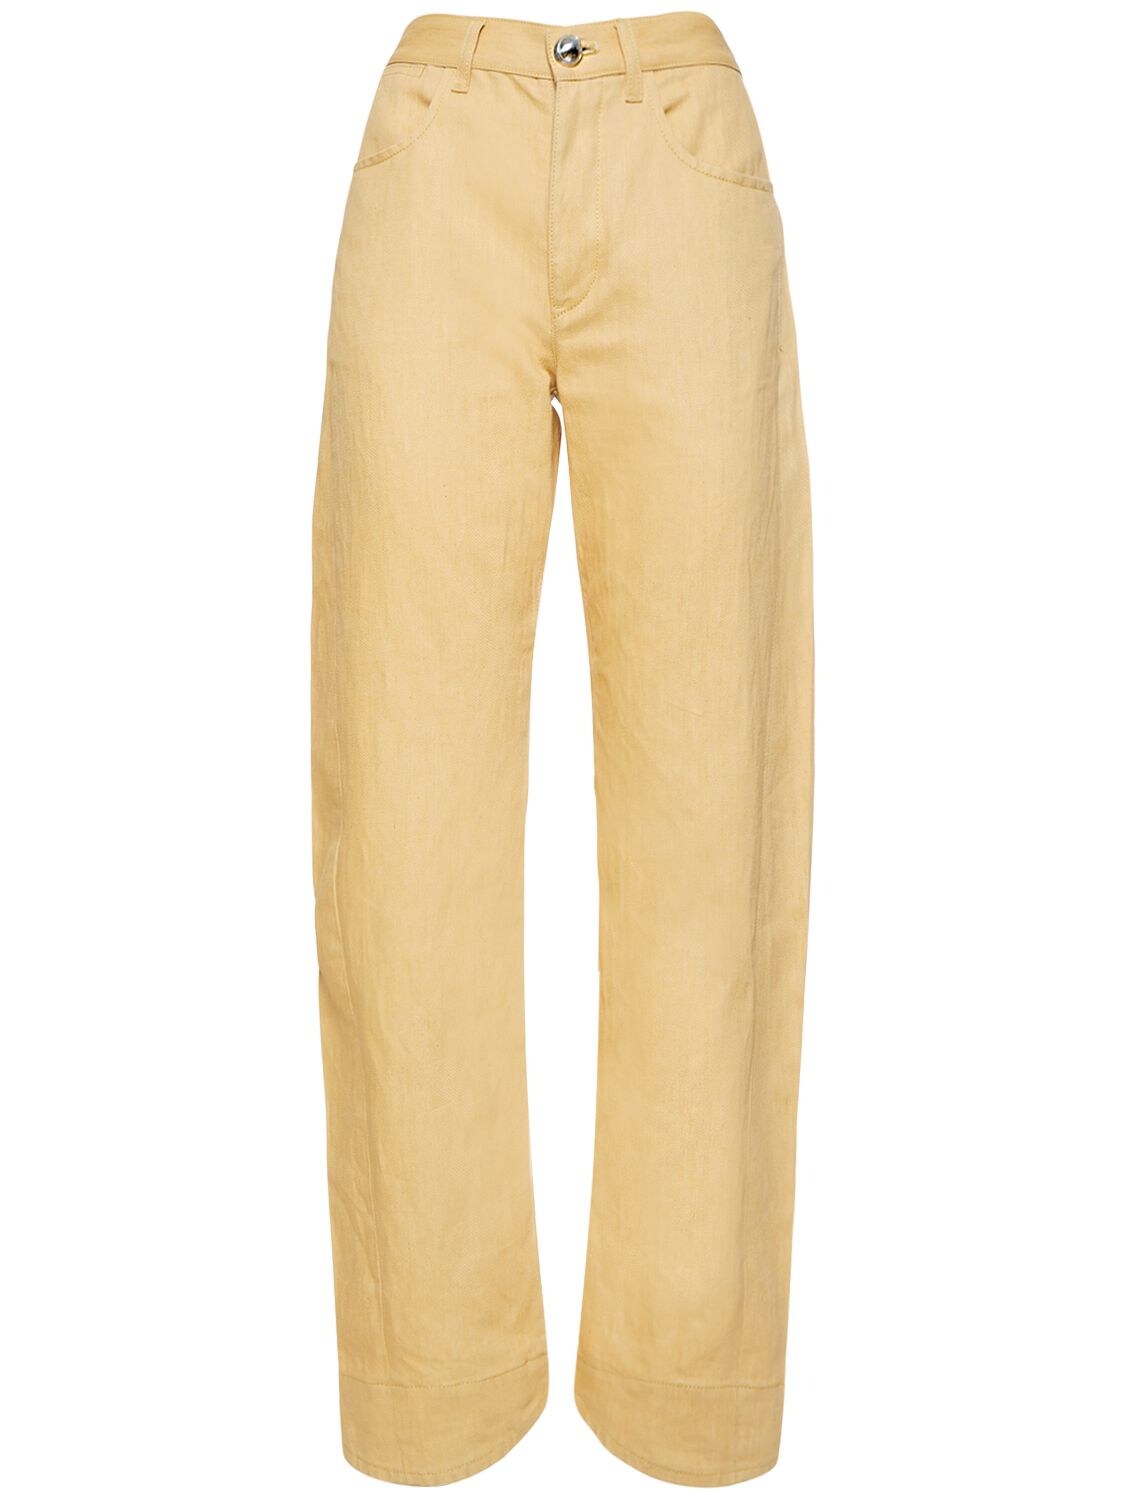 JIL SANDER Coated Cotton & Linen Loose Fit Jeans